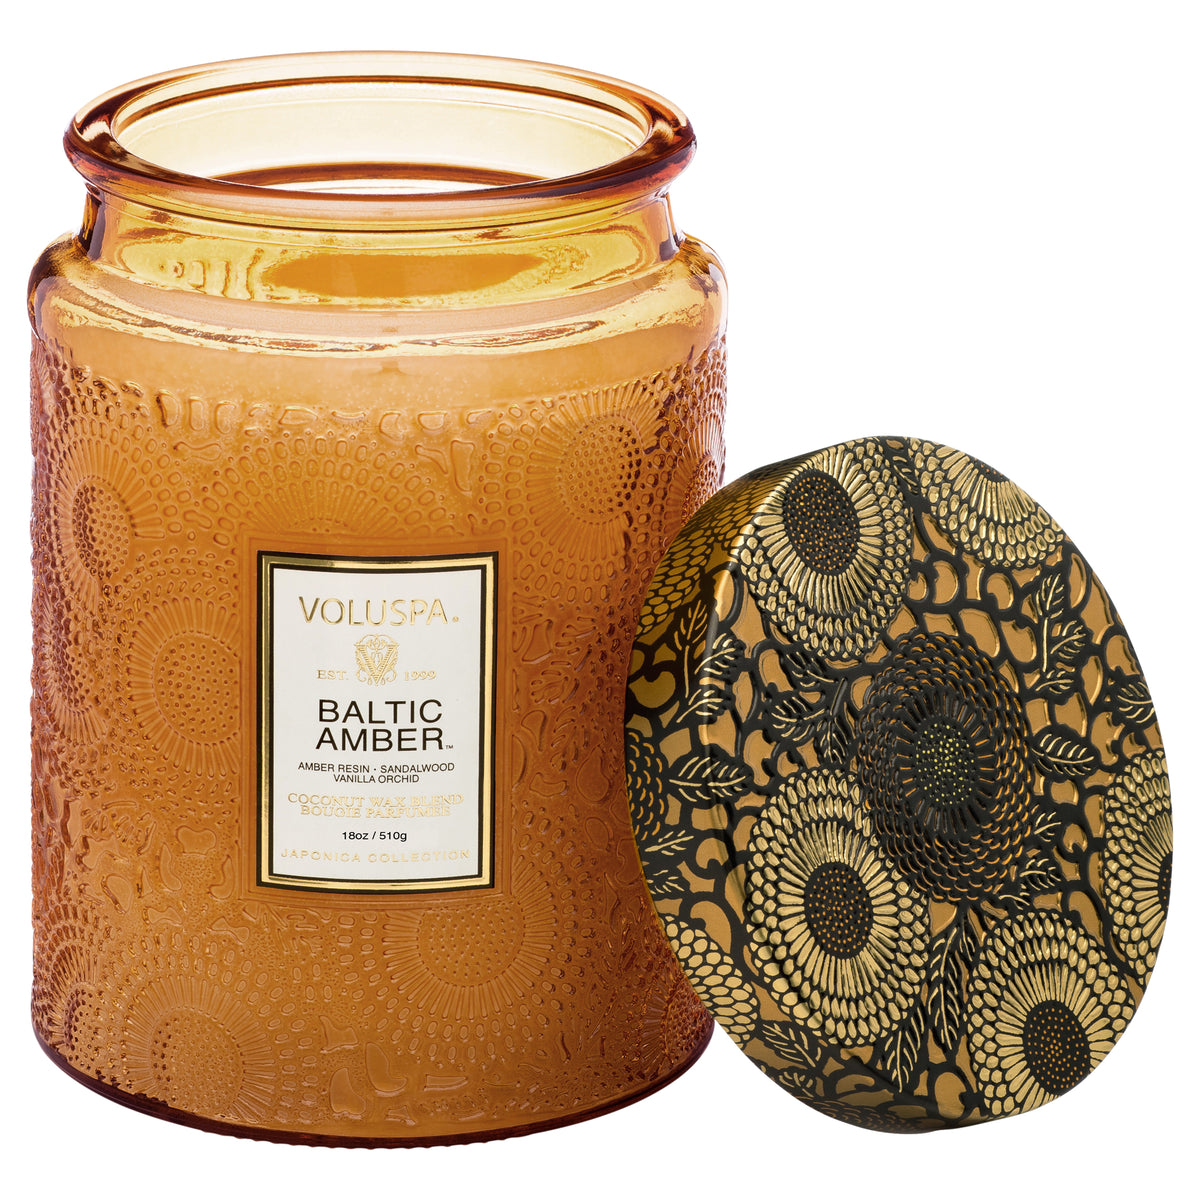 VOLUSPA Baltic Amber Candle | 18oz Large Jar